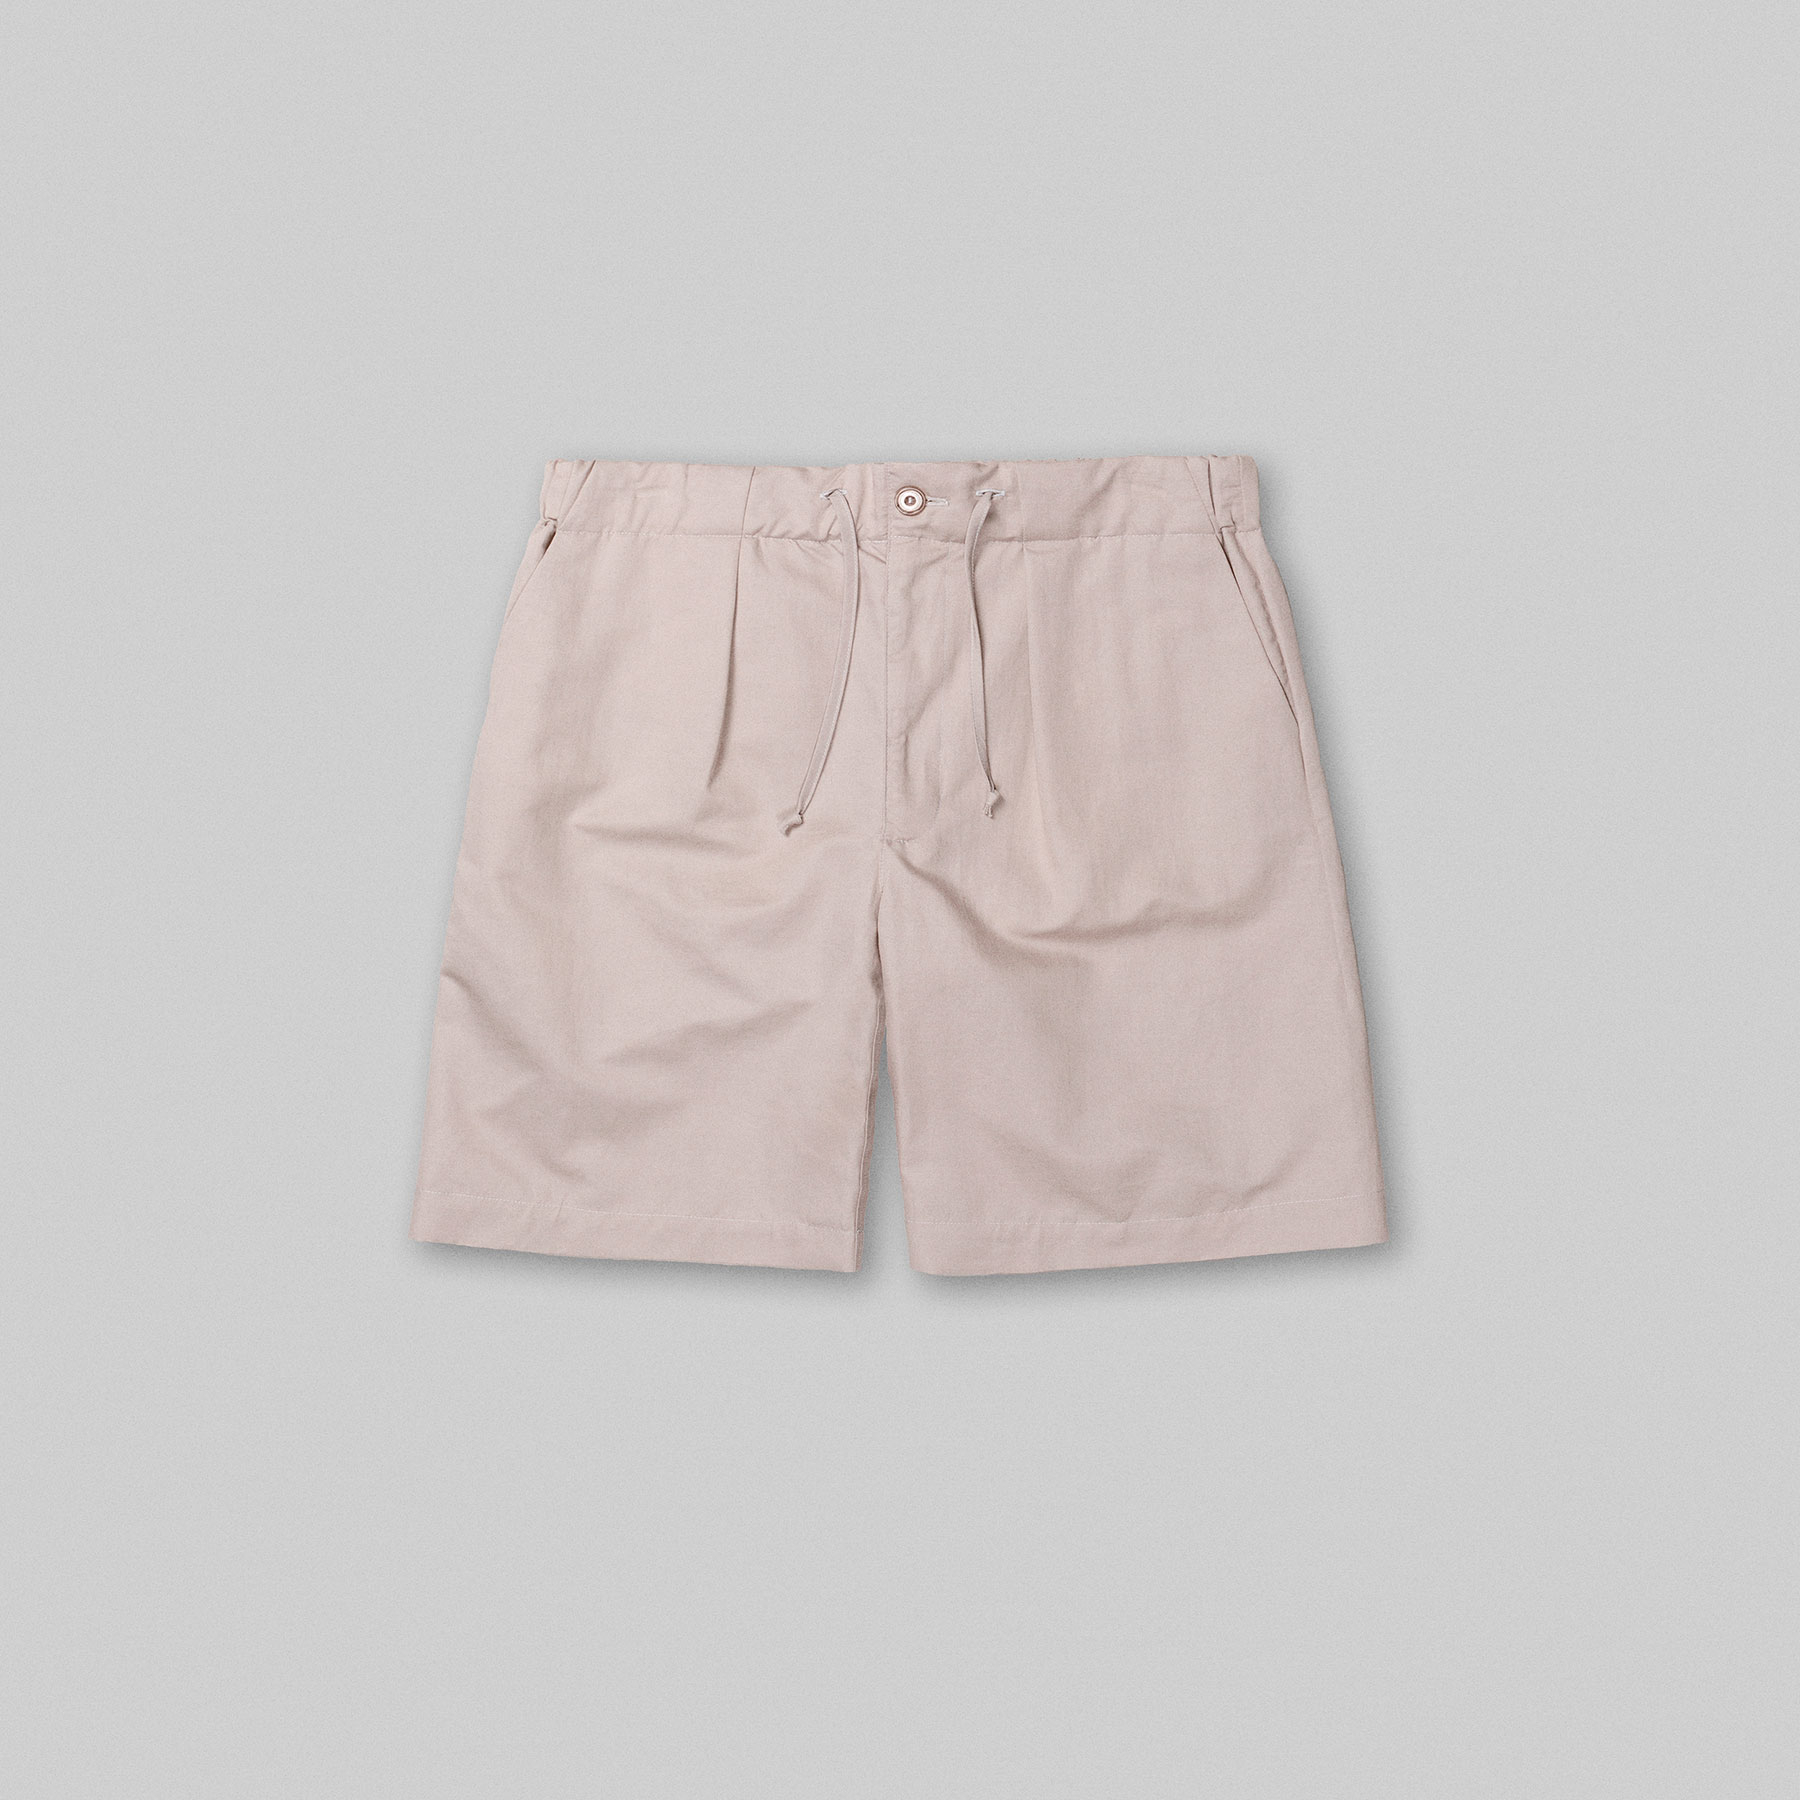 TERRA shorts by Arpenteur in Stone taffetas color